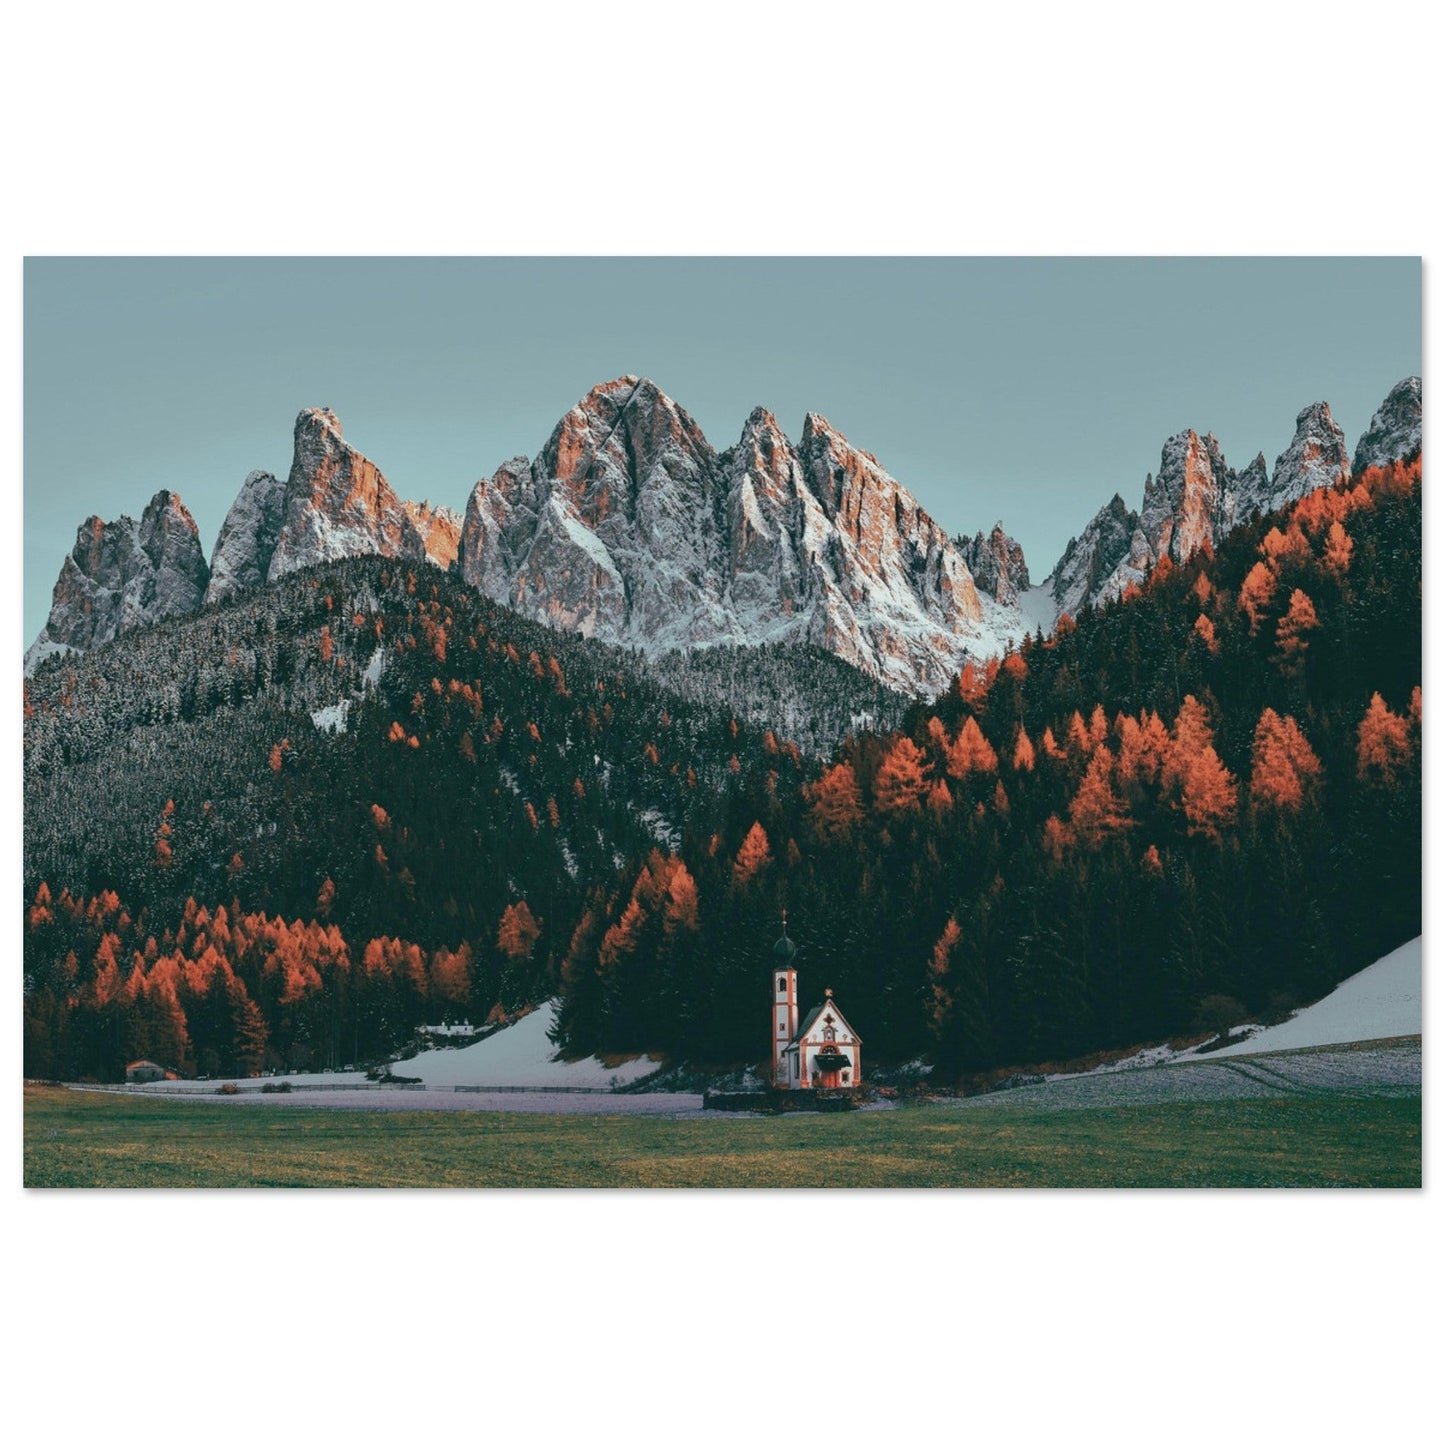 Vente Photo de Funes, Trentin-Haut-Adige, Italie #6 - Tableau photo paysage